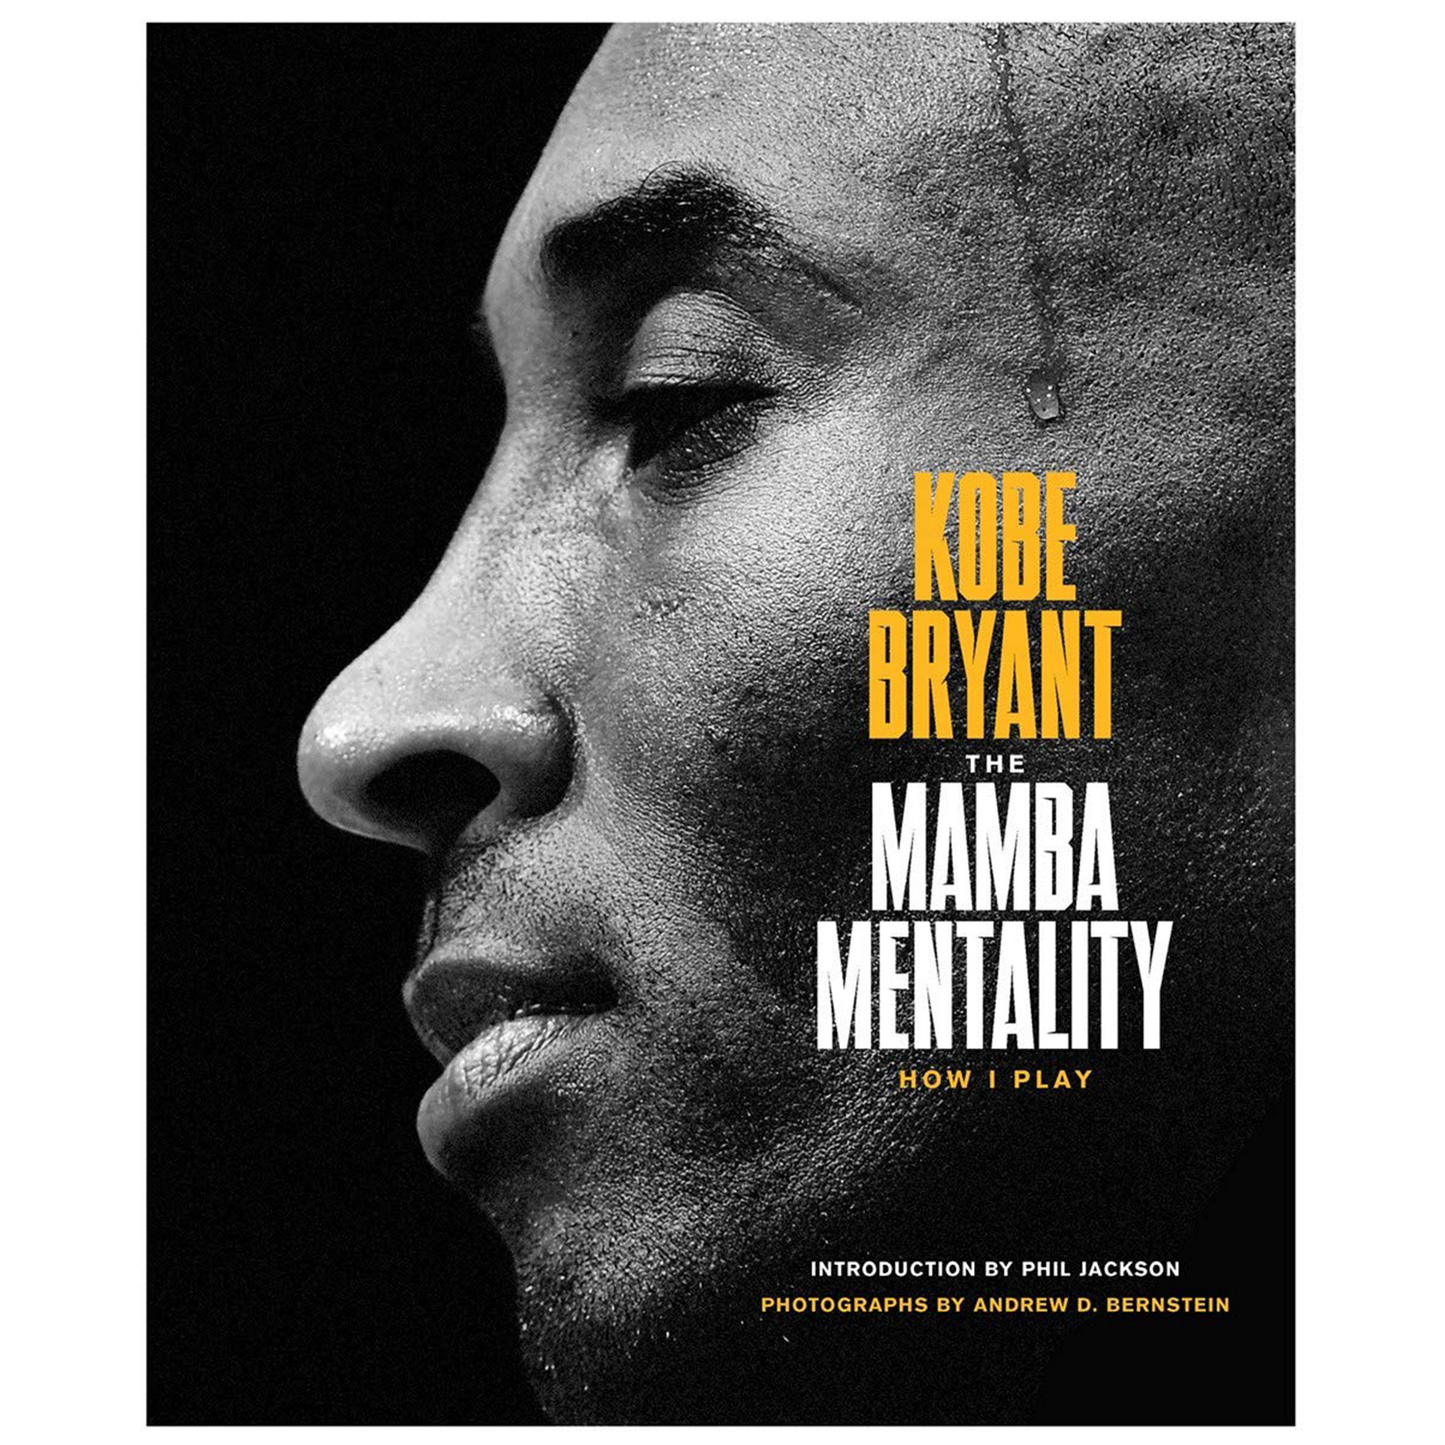 The Mamba Mentality: How I Play Hardcover By Kobe Bryant